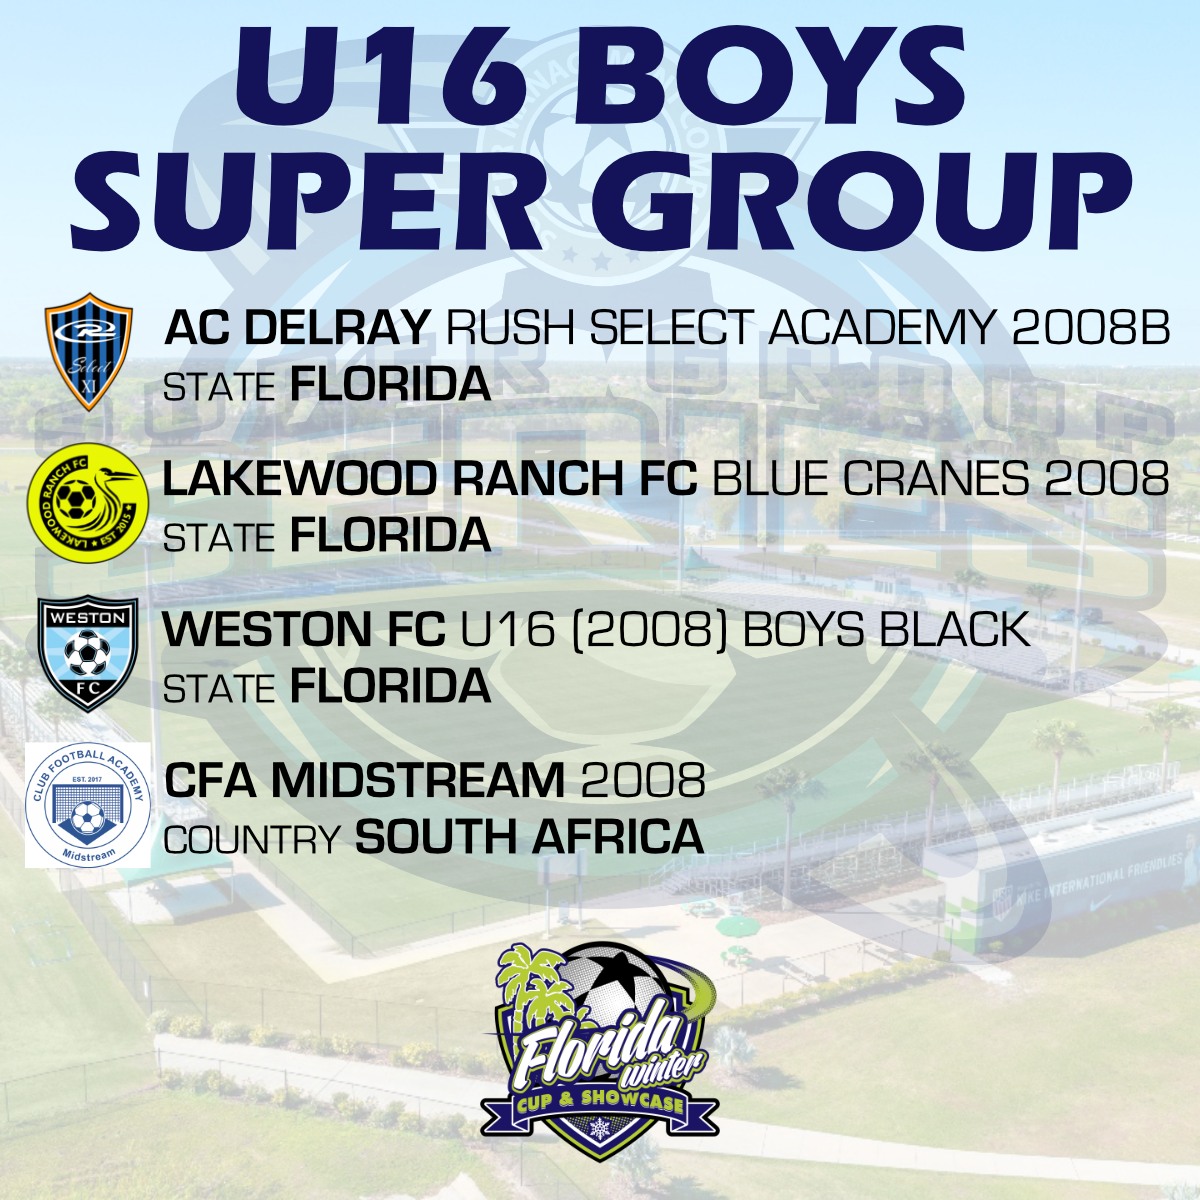 U16 Boys Super Group